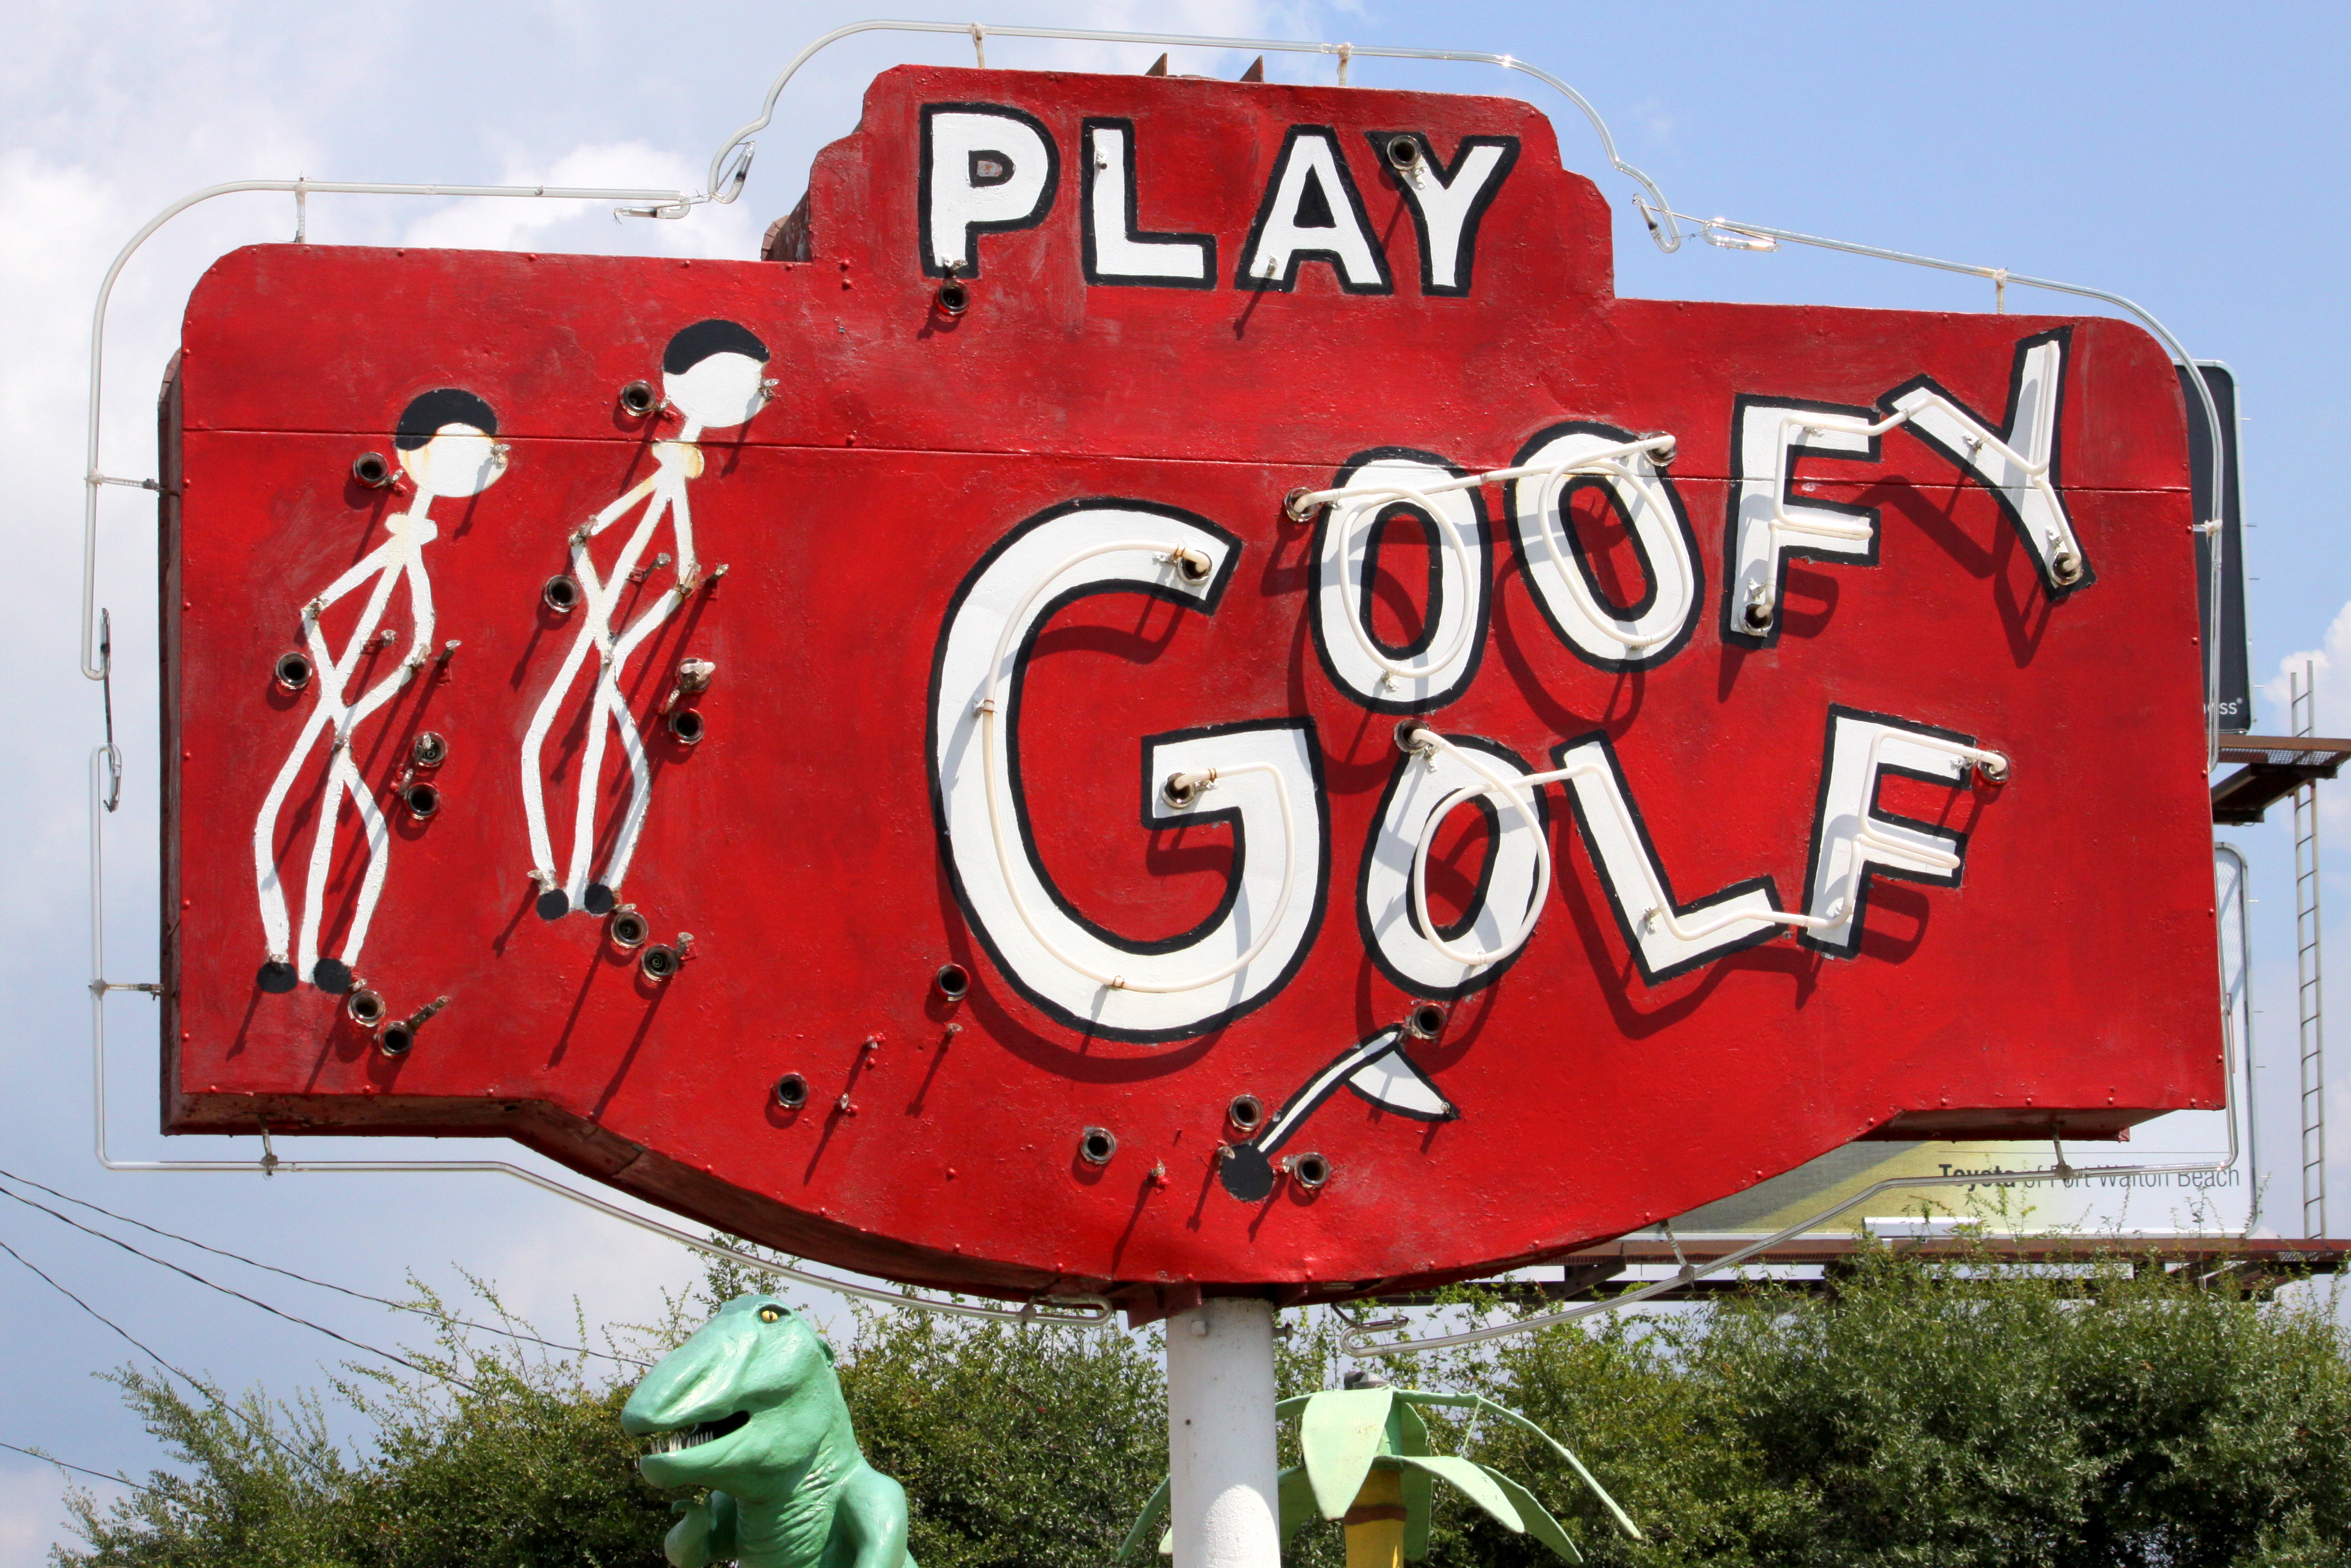 Goofy Golf - 401 Eglin Parkway NE, Fort Walton Beach, Florida U.S.A. - September 18, 2017